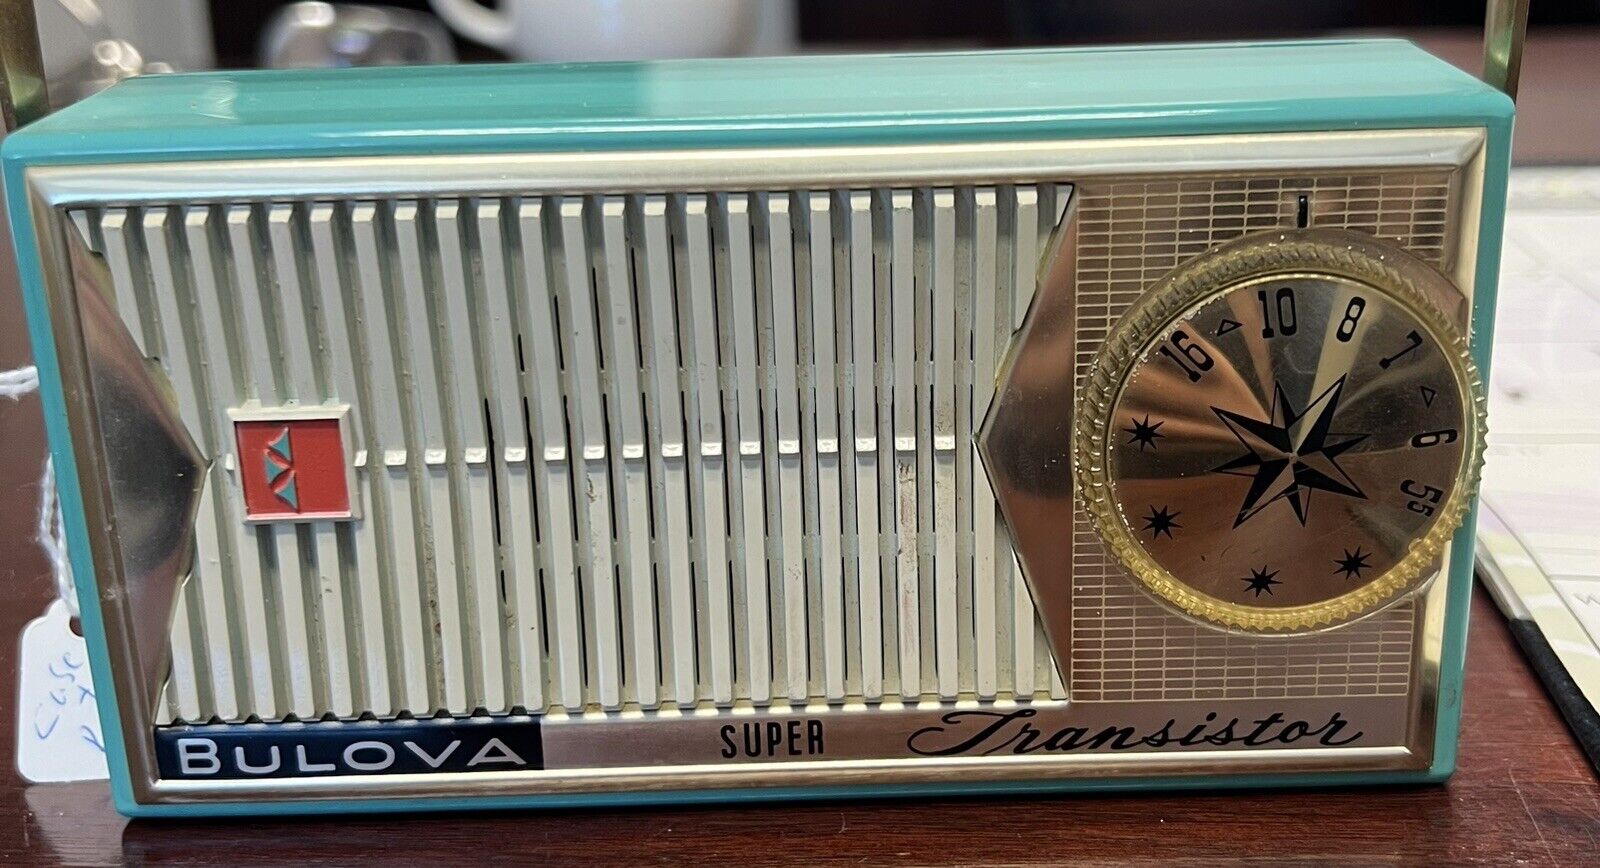 Bulova Transistor Radio 1950s Blue Green Model 730 With Leather Case